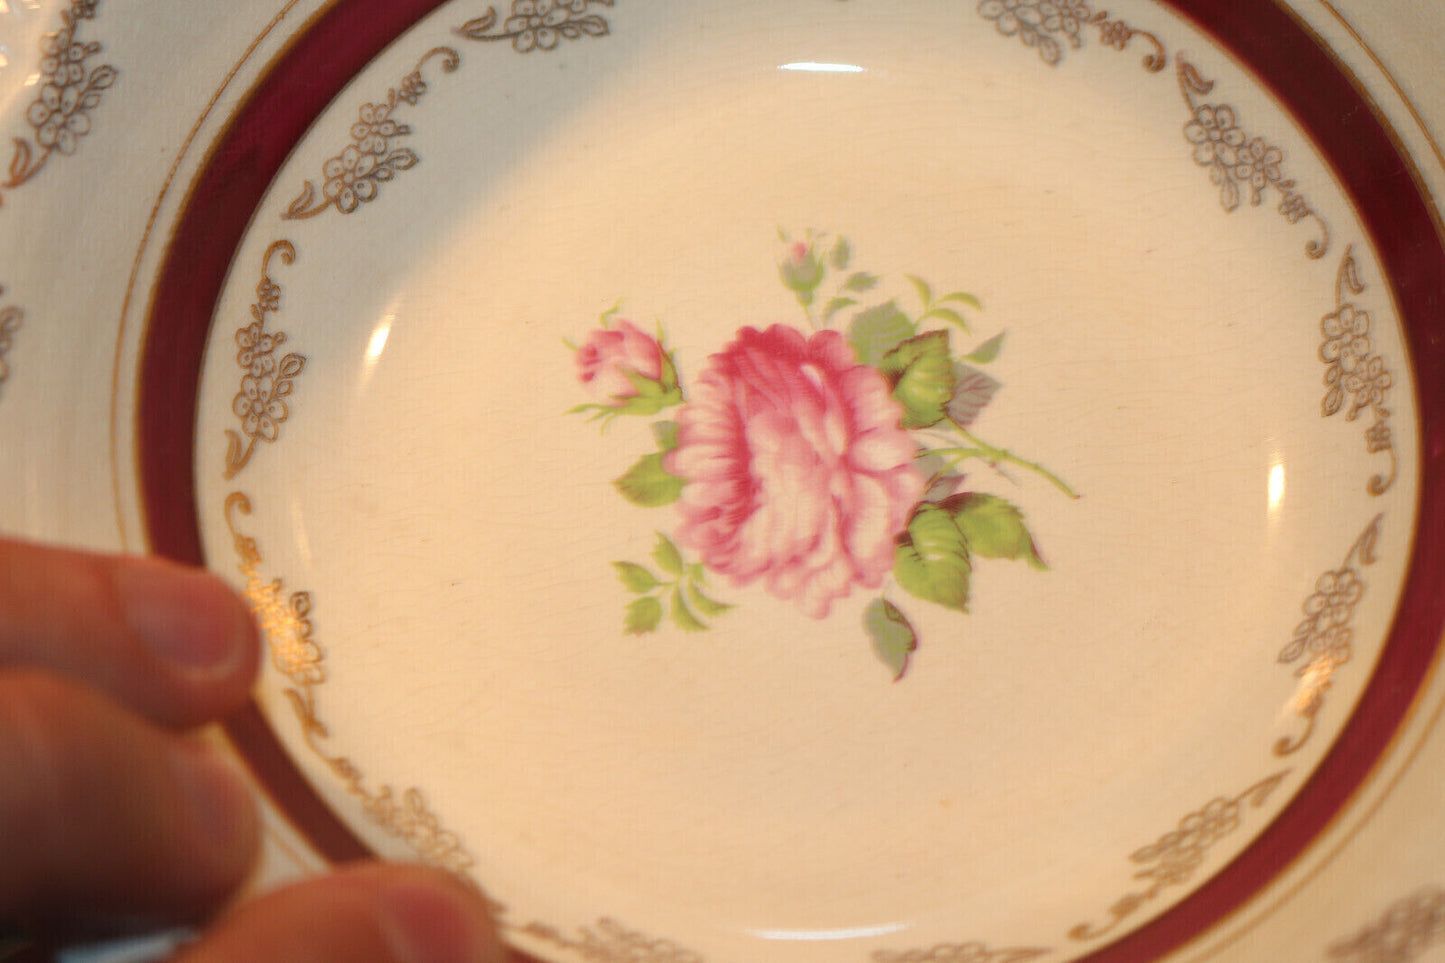 2 Of A Set From Princess Rose 22 Karat Gold Winterton Longton Bowl Porcelain